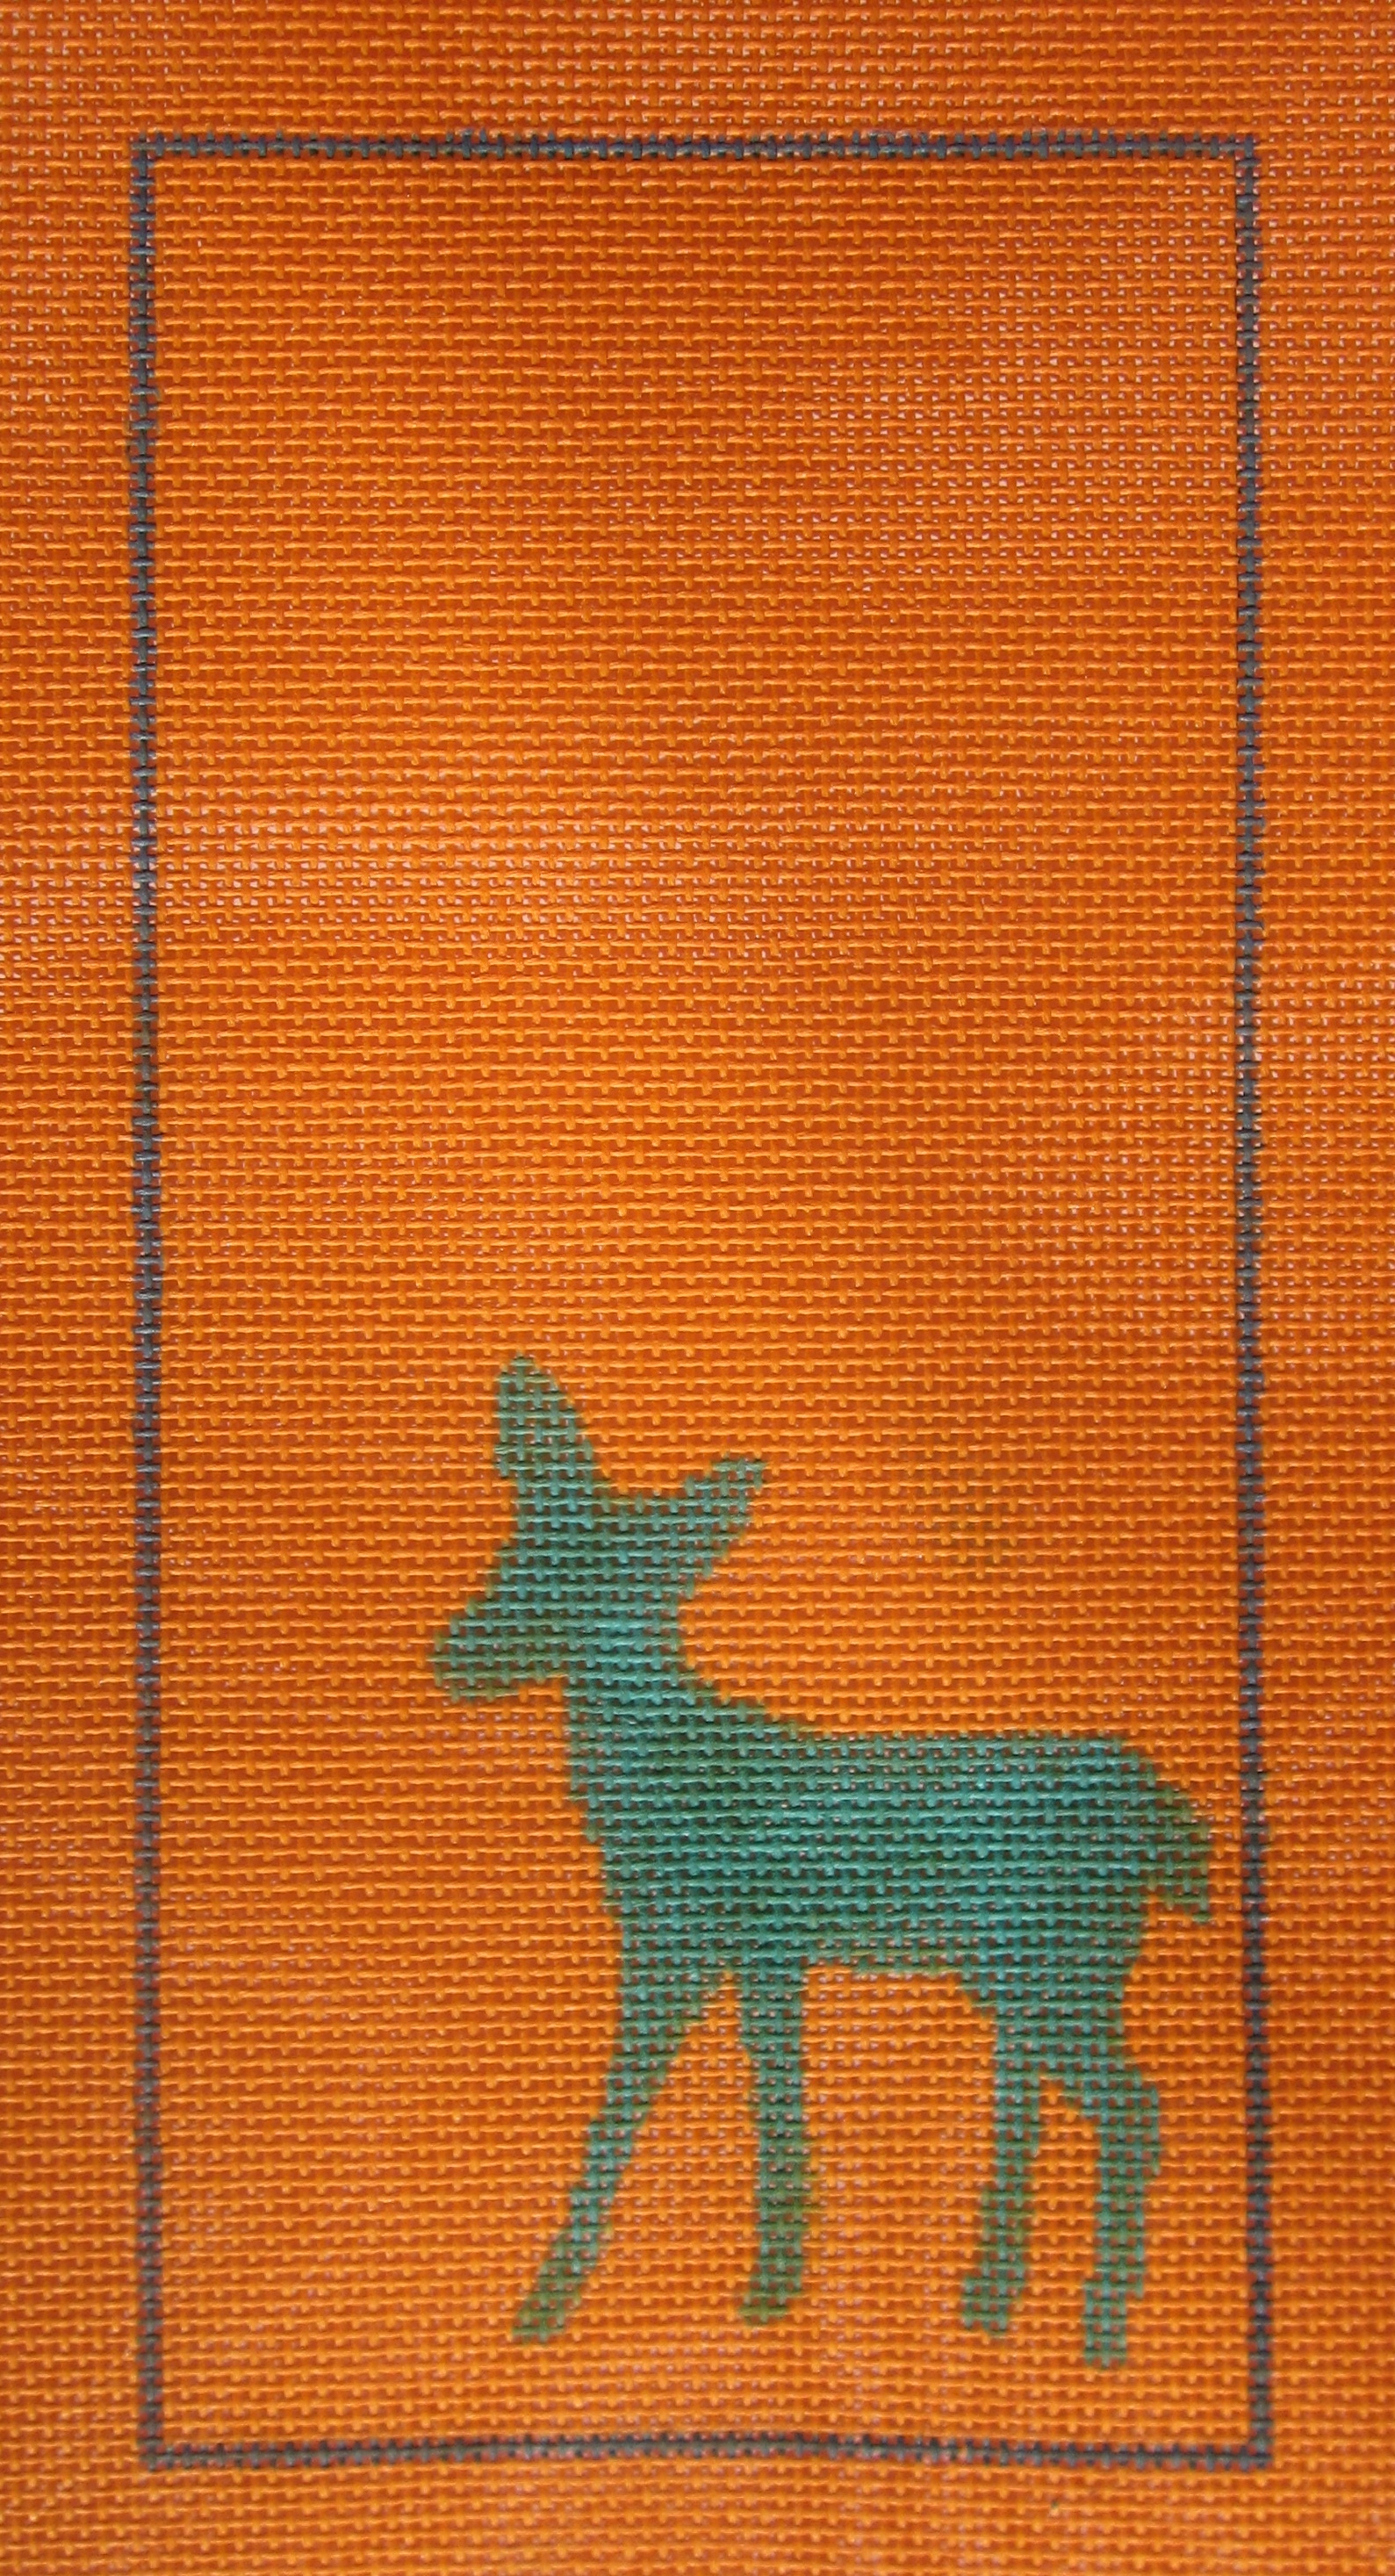 3.5" x 7" Woodland Critter Deer on Orange Canvas